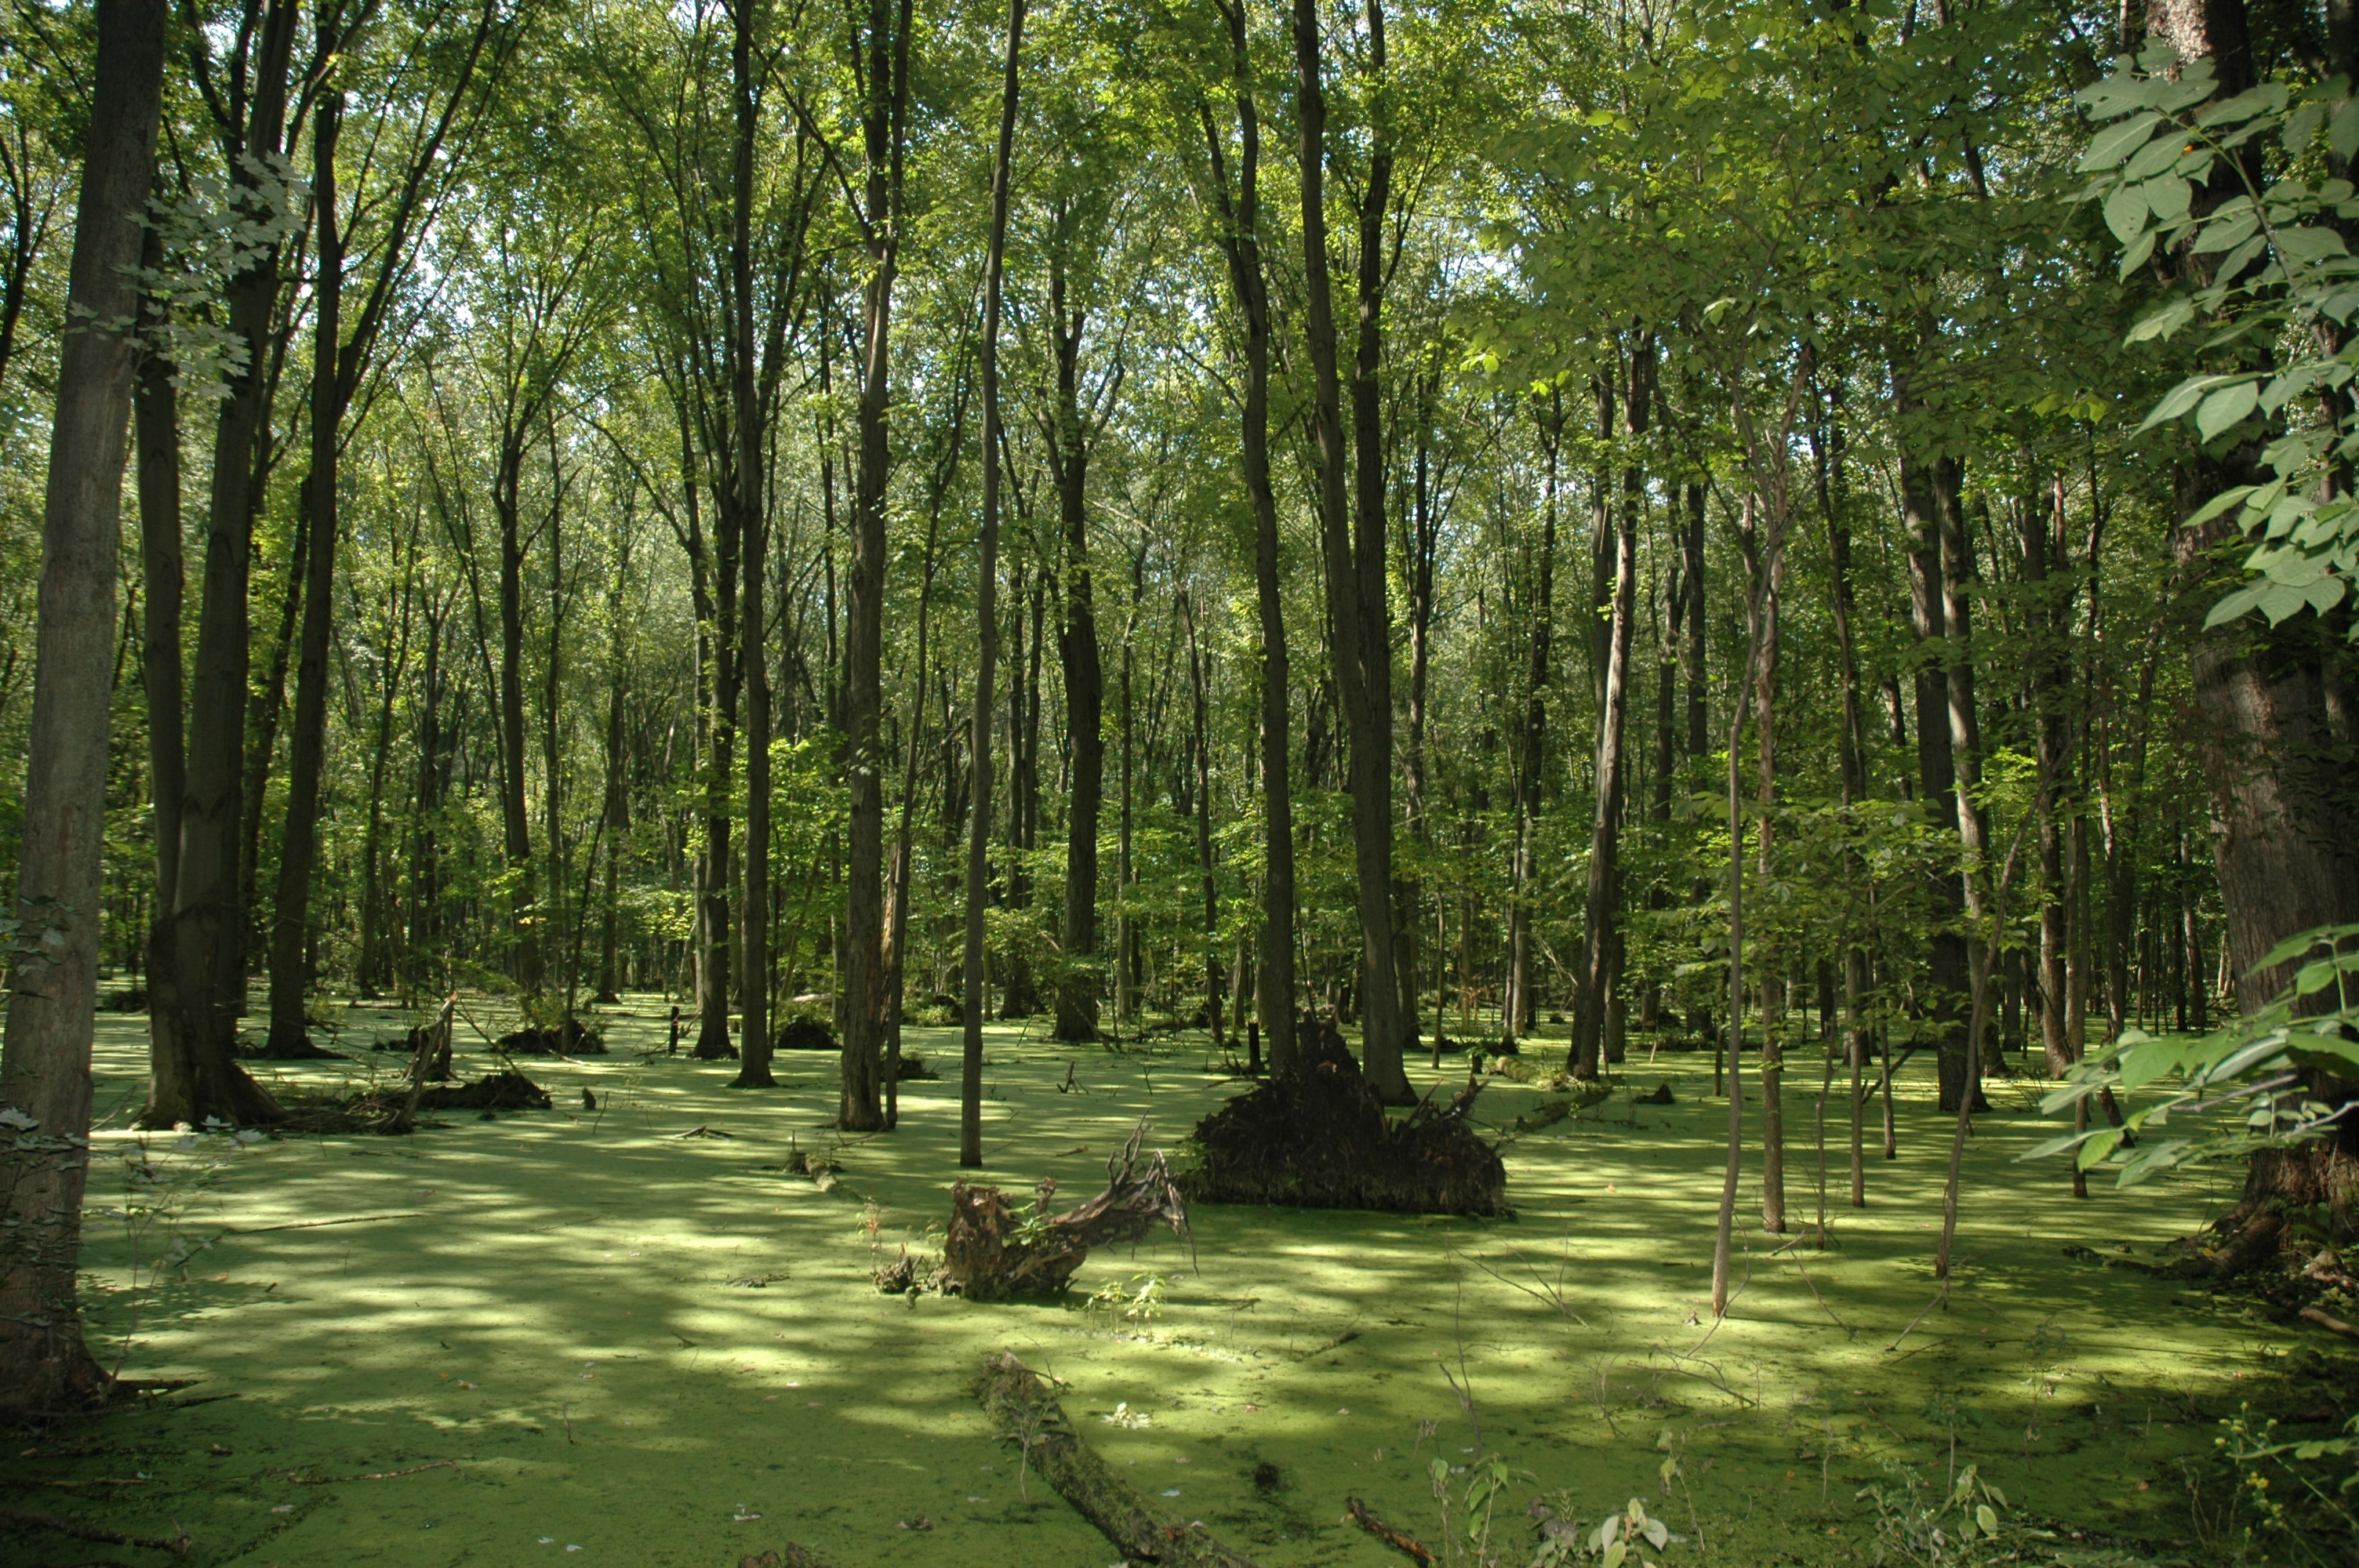 Image swamp